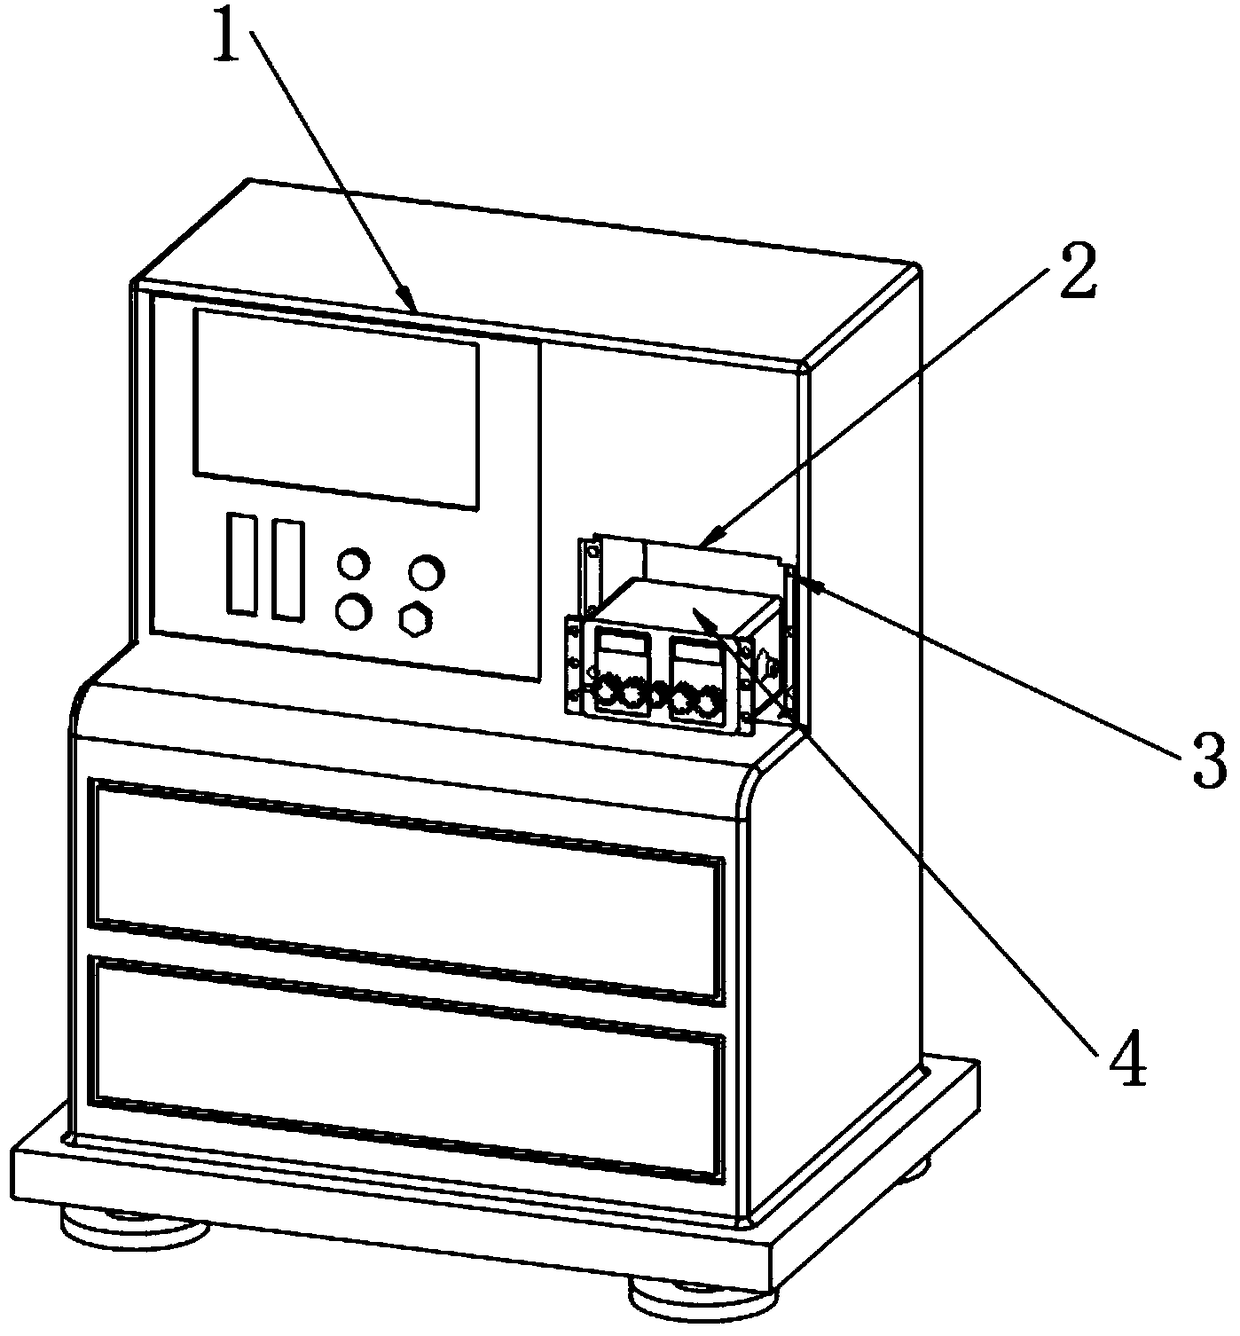 Ventilation triggering apparatus and method for anaesthesia machine